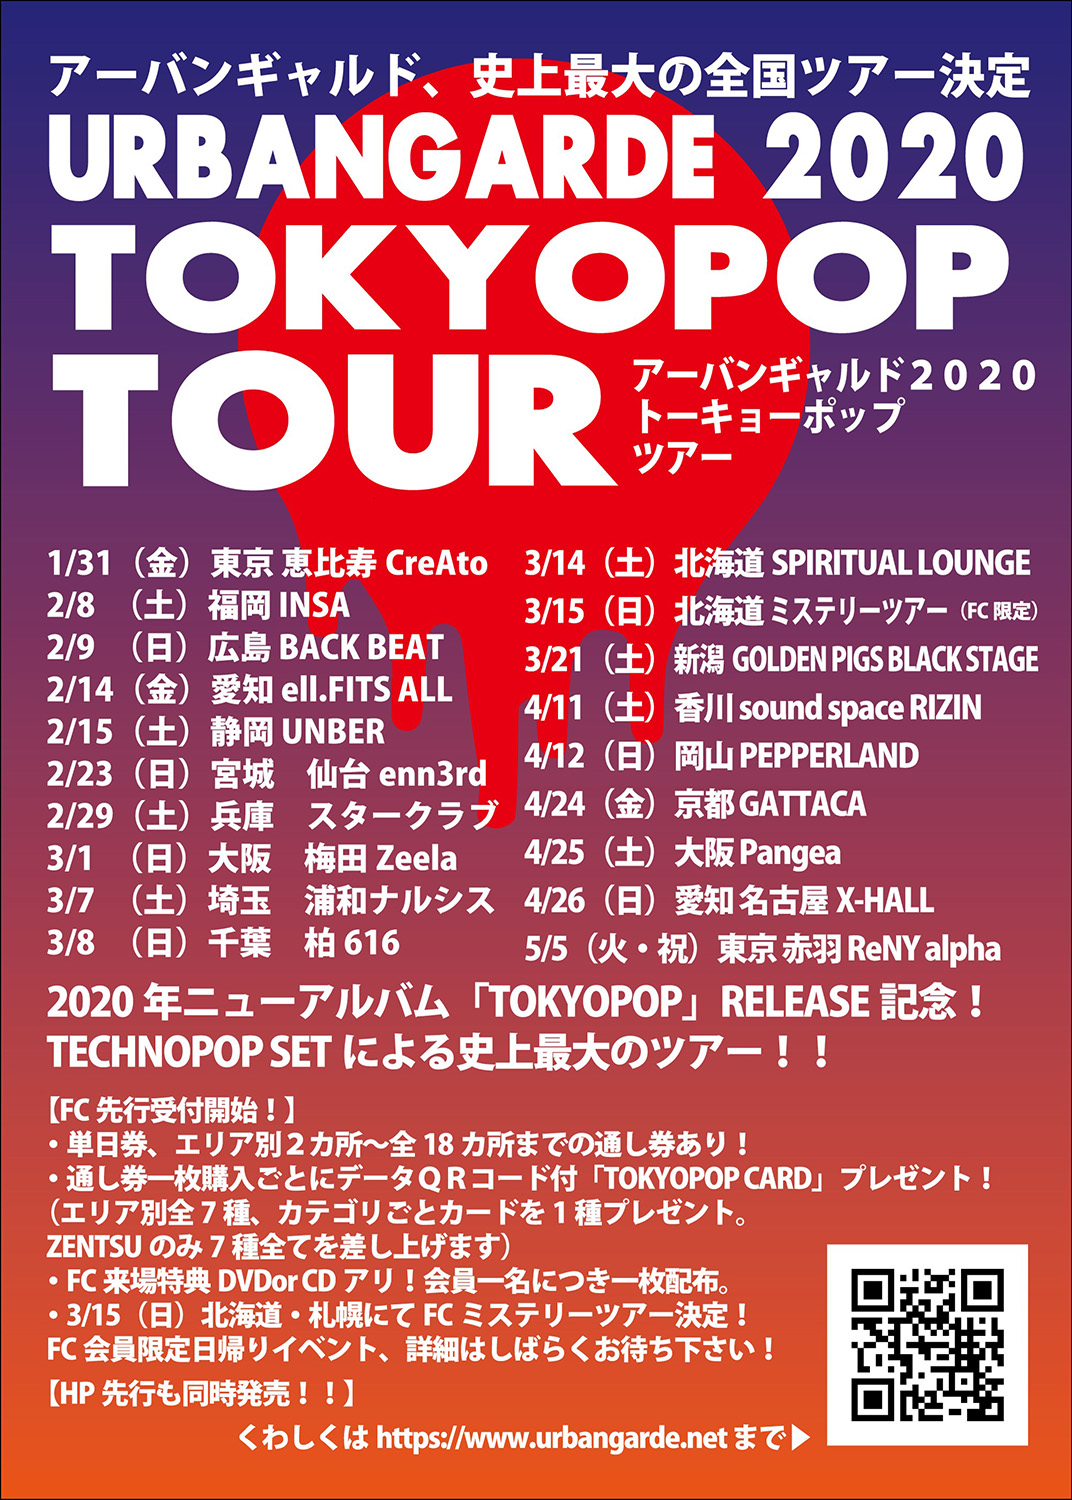 URBANGARDE TOKYOPOP TOUR 2020